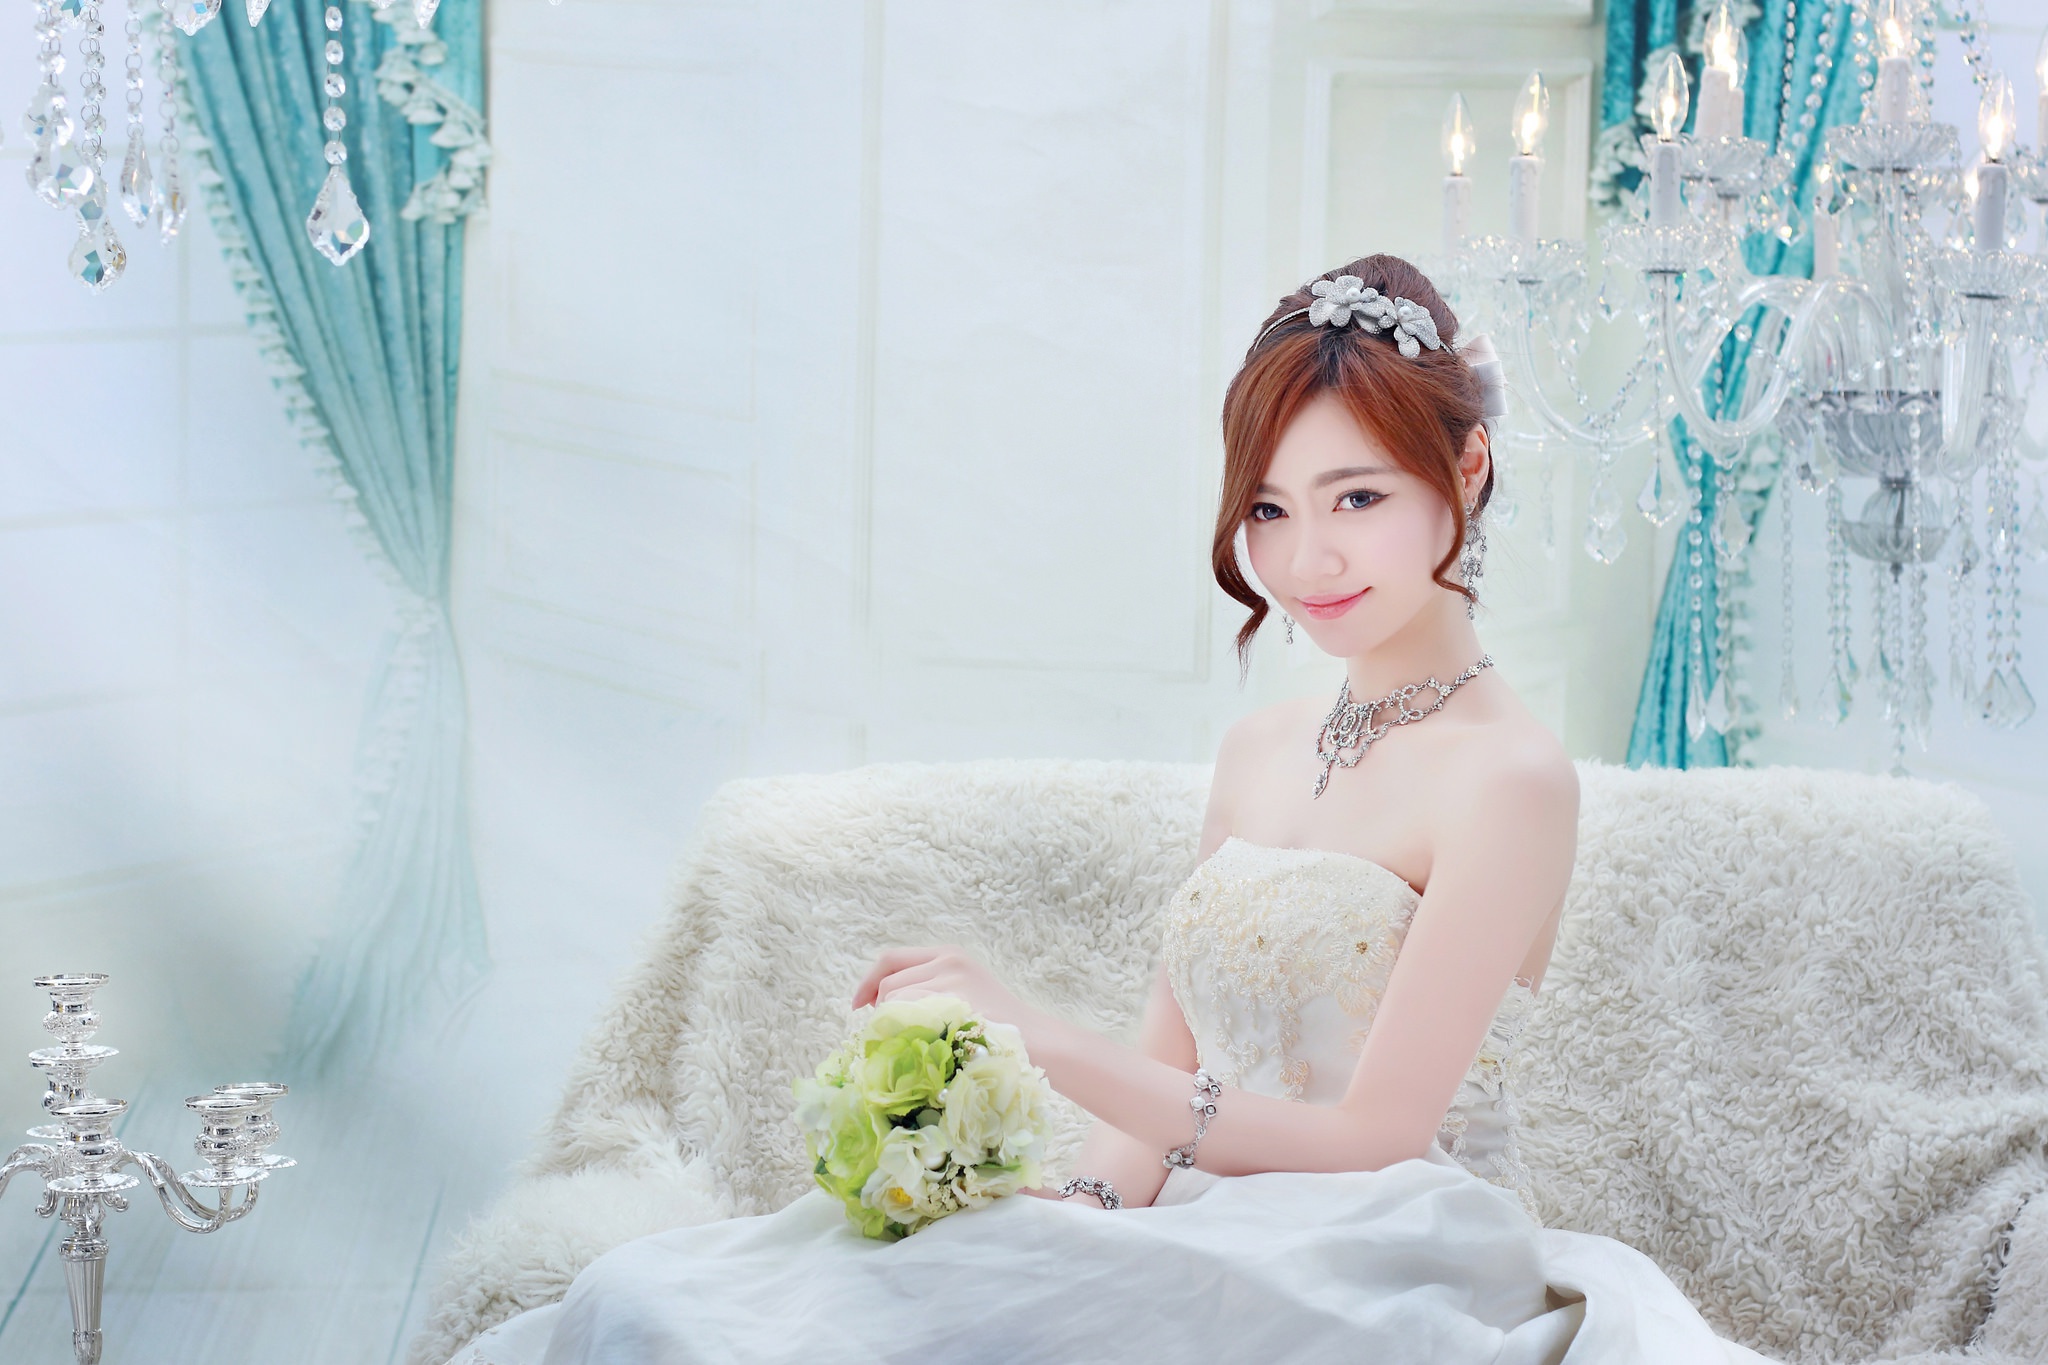 Bride Woman Girl Asian Necklace Wedding Dress White Dress Redhead Chandelier 2048x1365